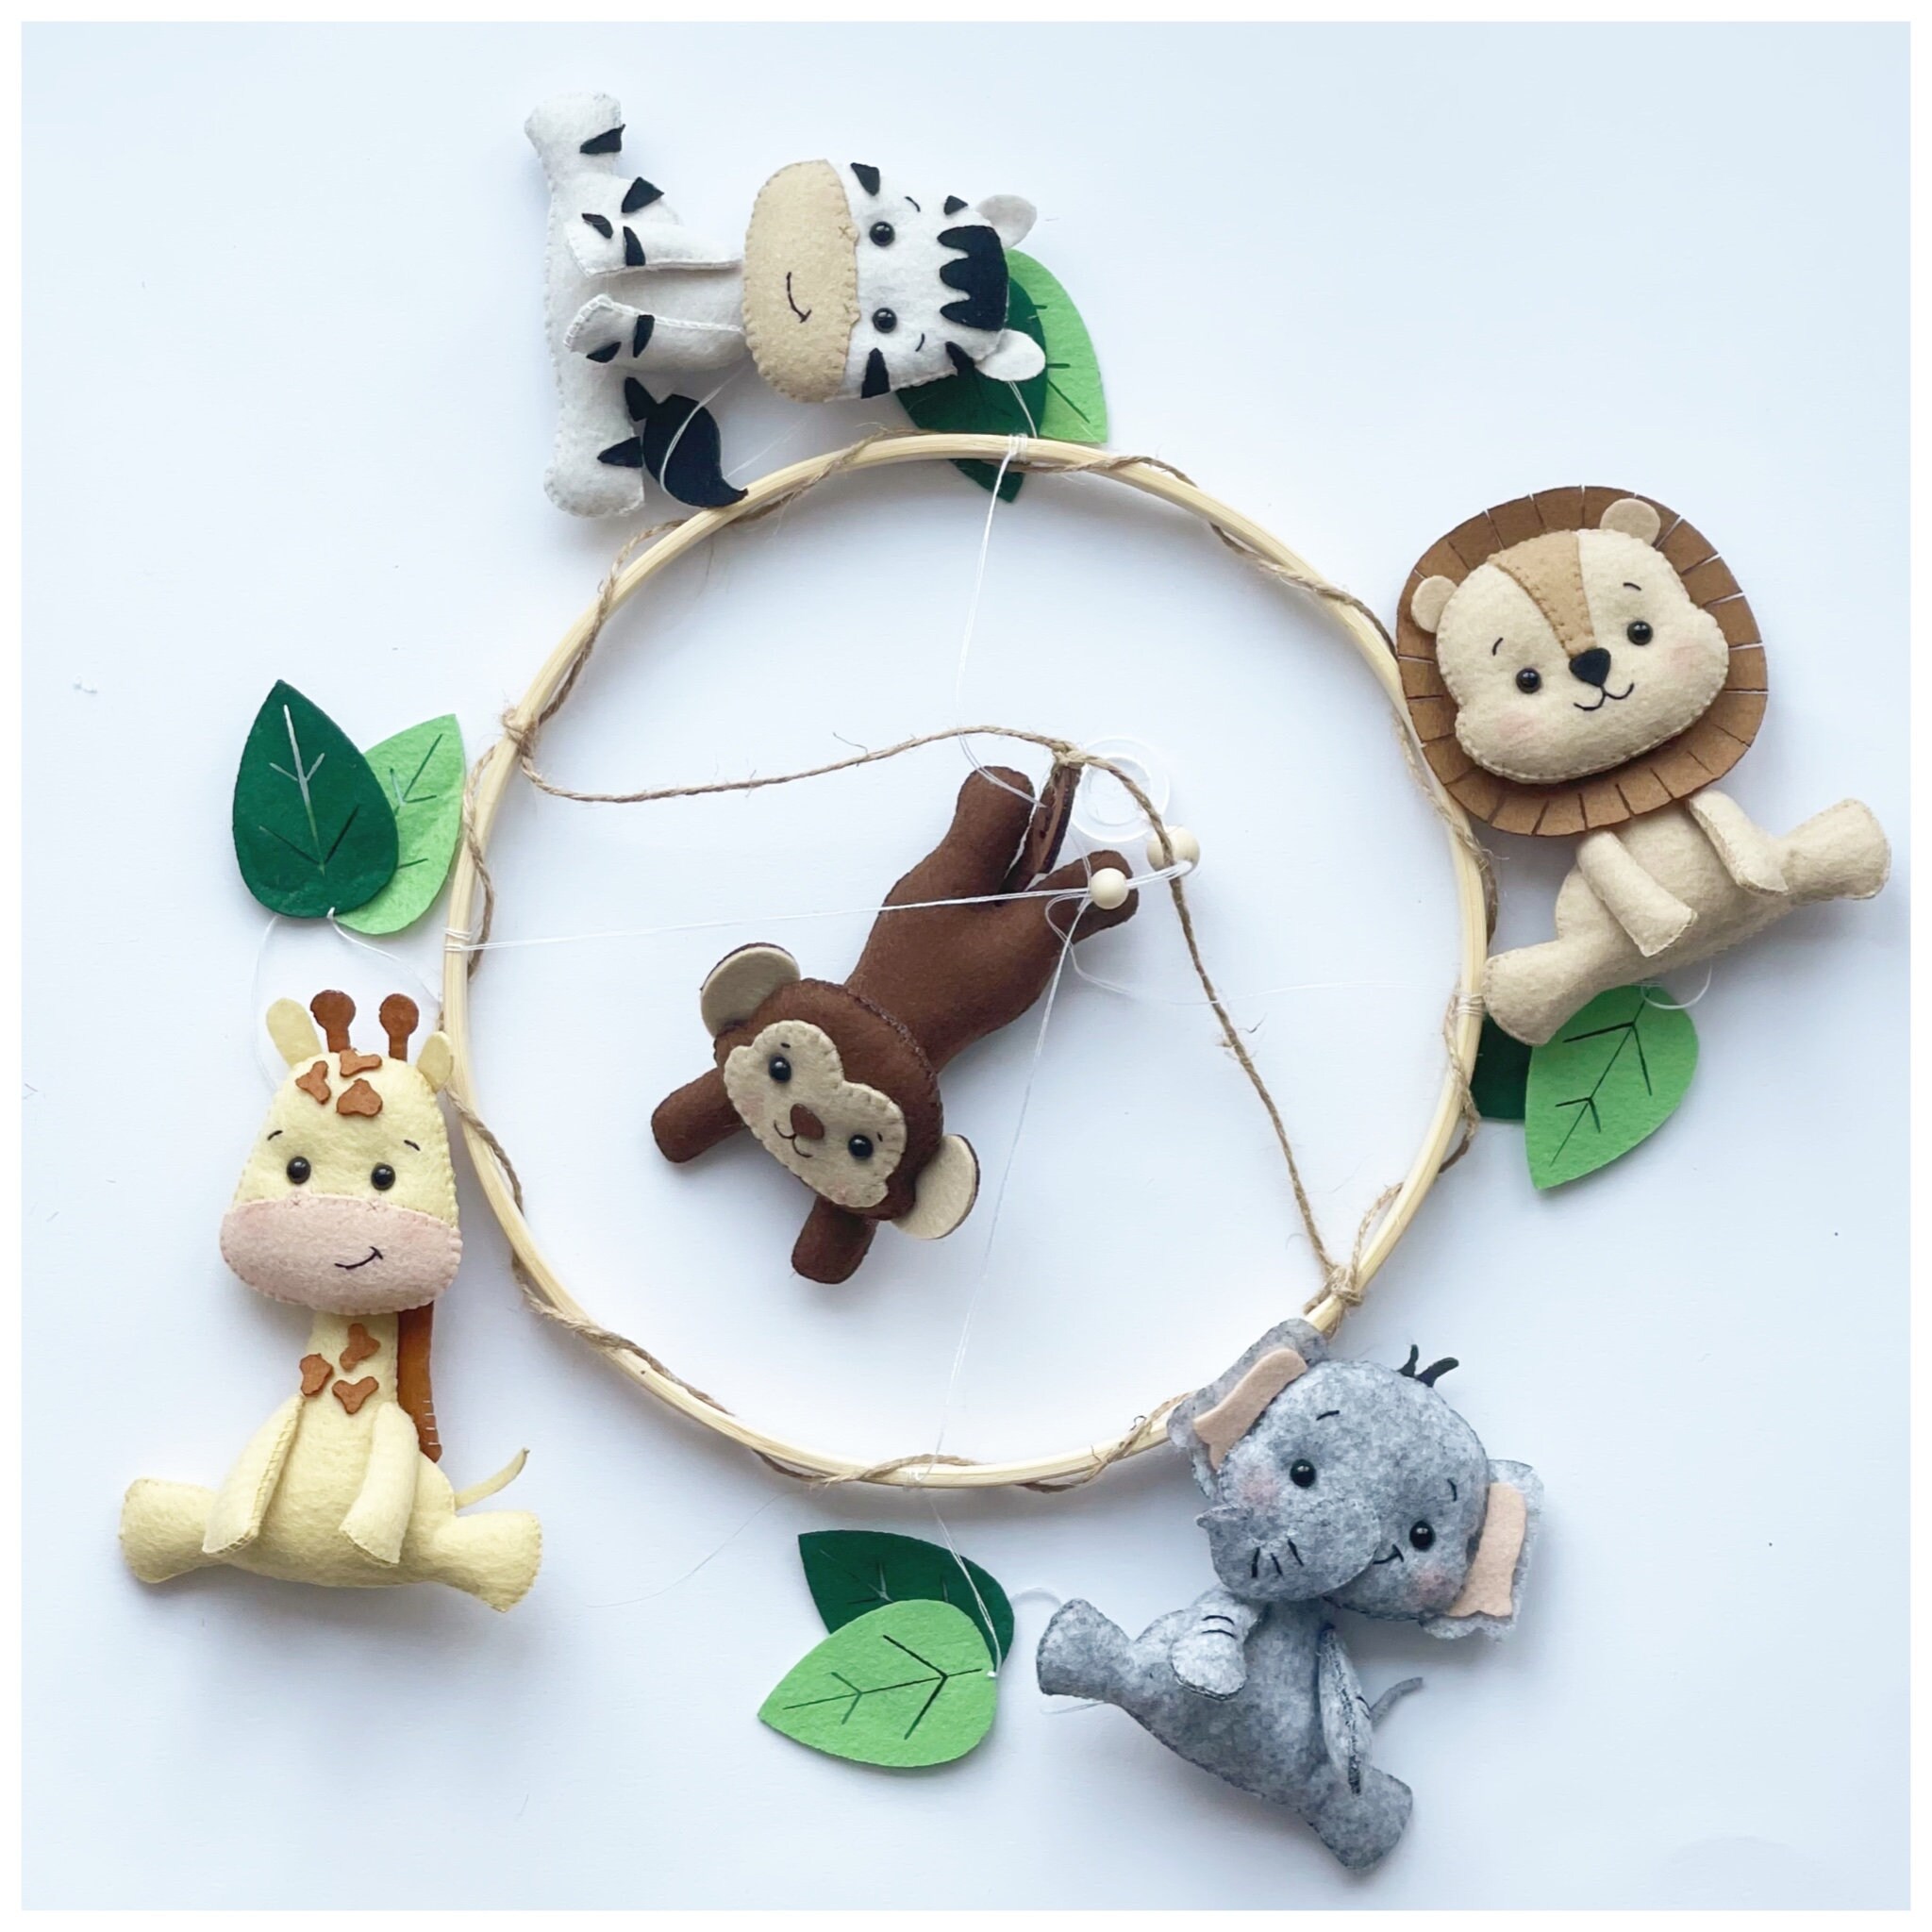  Little Hippo Kit de recuerdo de adorno para bebé, 2 caballetes,  regalos de baby shower, kit de huellas de bebé y kit de huellas de manos, regalos  personalizados para bebés, Navidad